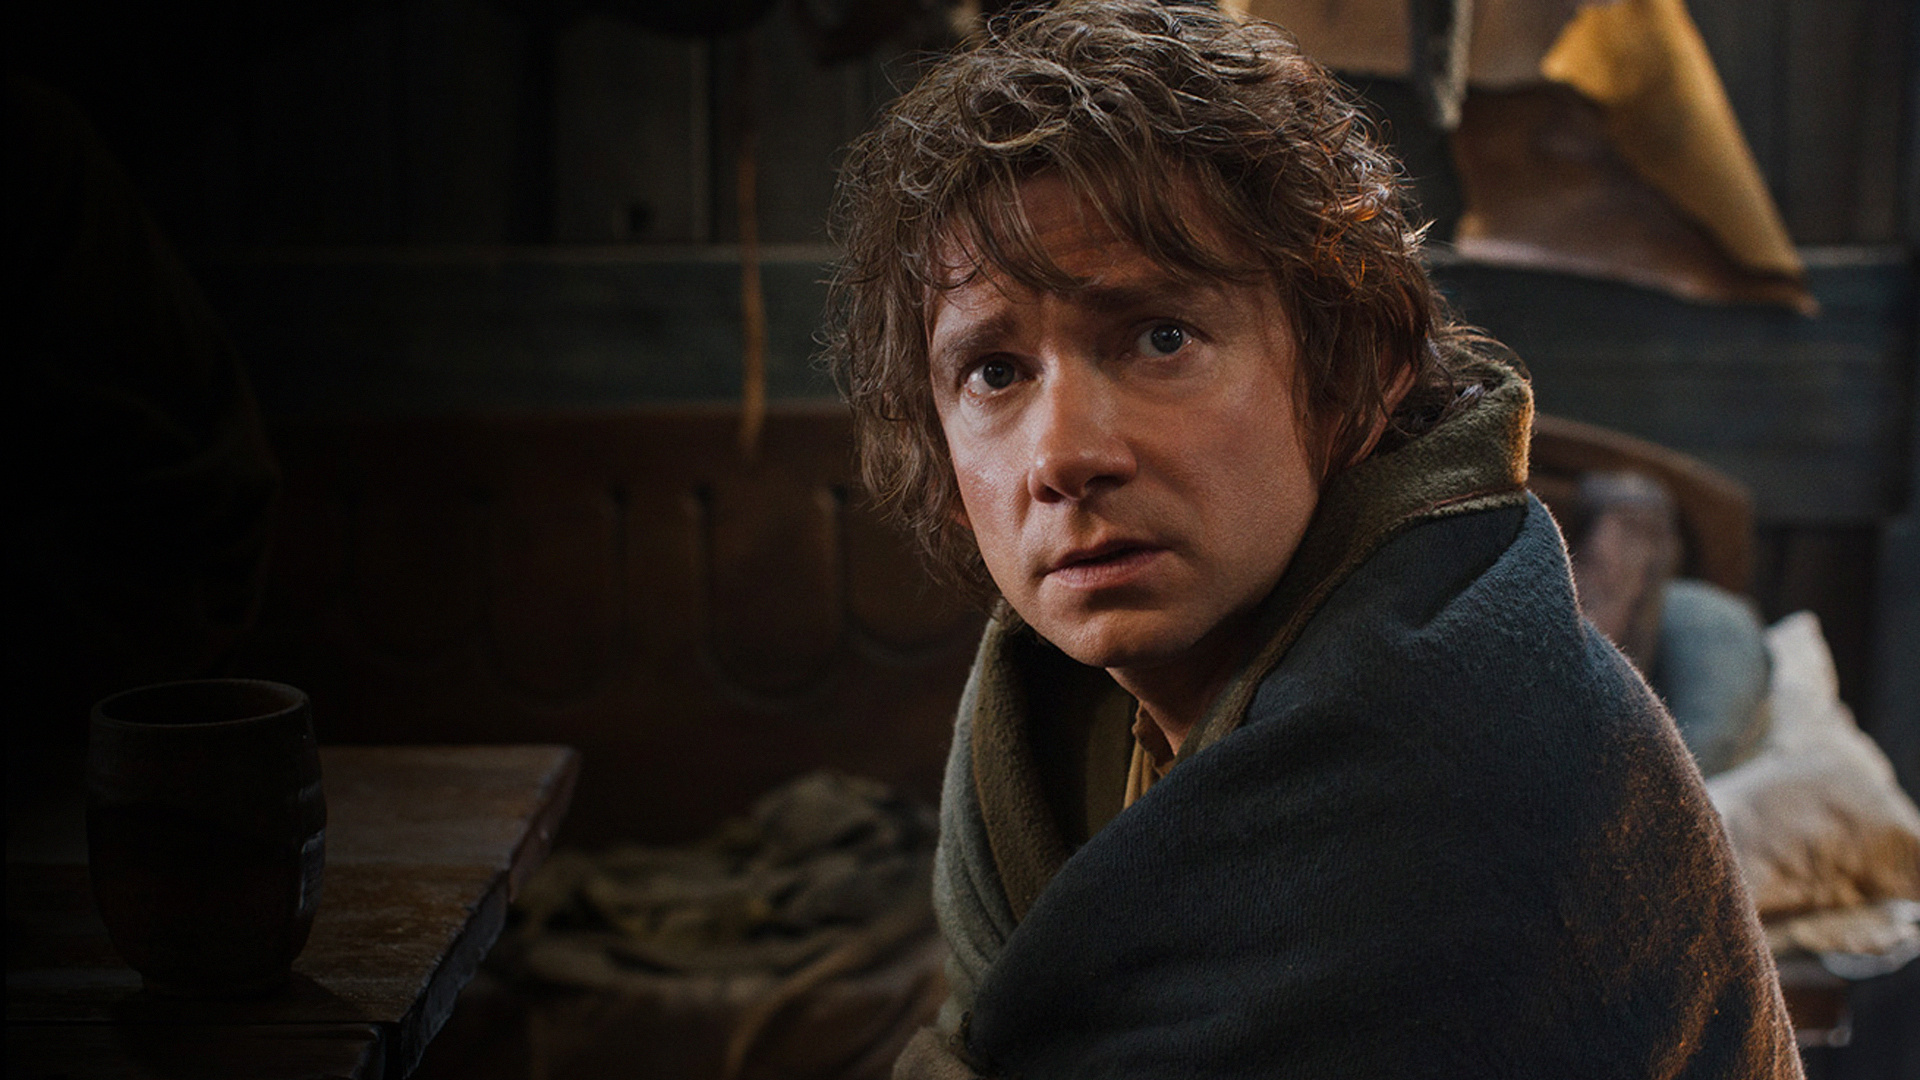 Bilbo Baggins character, Top wallpaper, Captivating design, Film franchise, 1920x1080 Full HD Desktop